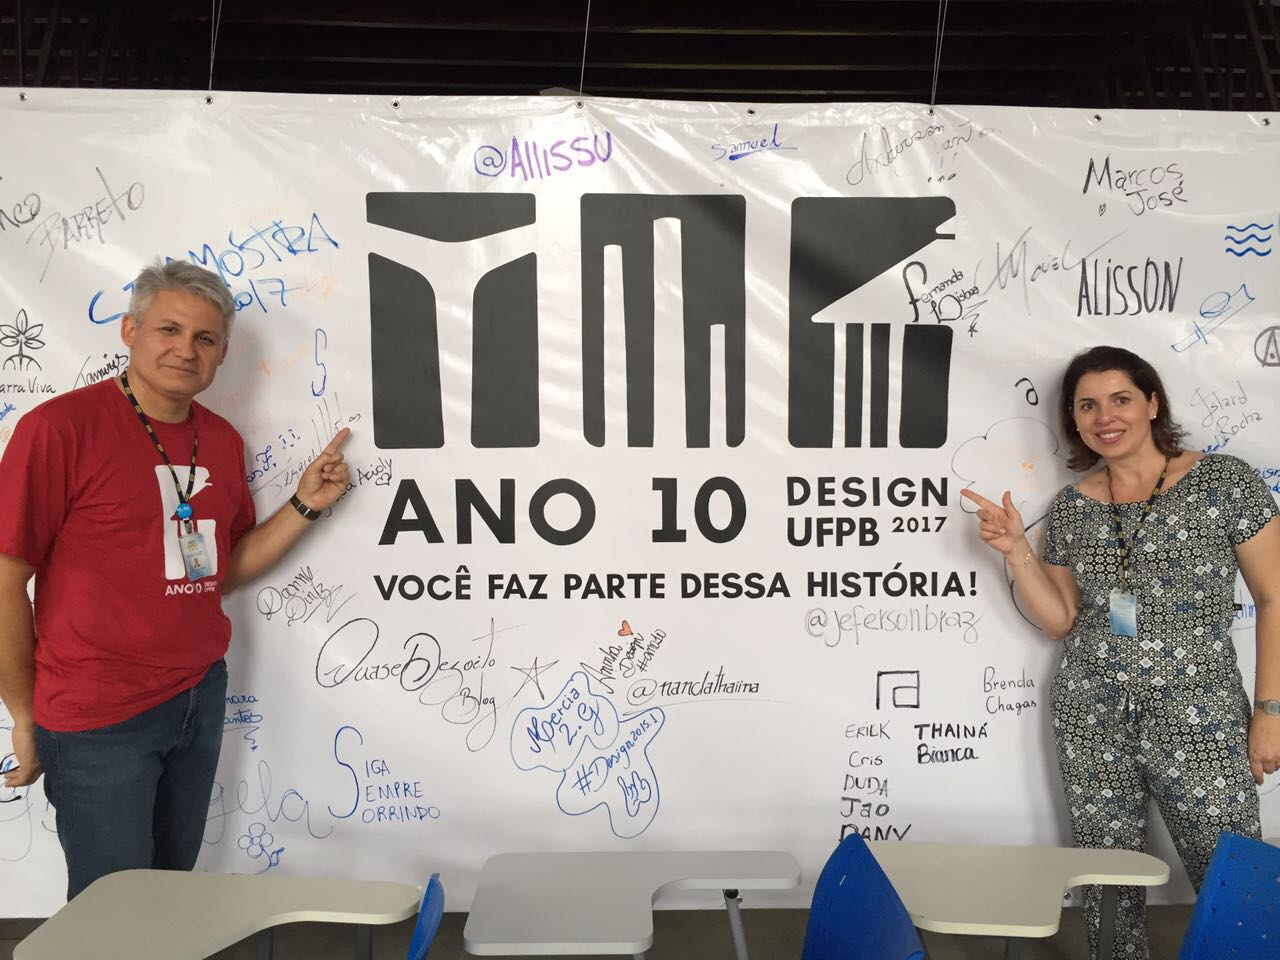 Giselle MERINO, Pesquisador, professor, Doctor of Engineering, Universidade do Estado de Santa Catarina, Florianópolis, UDESC, Departamento de Design